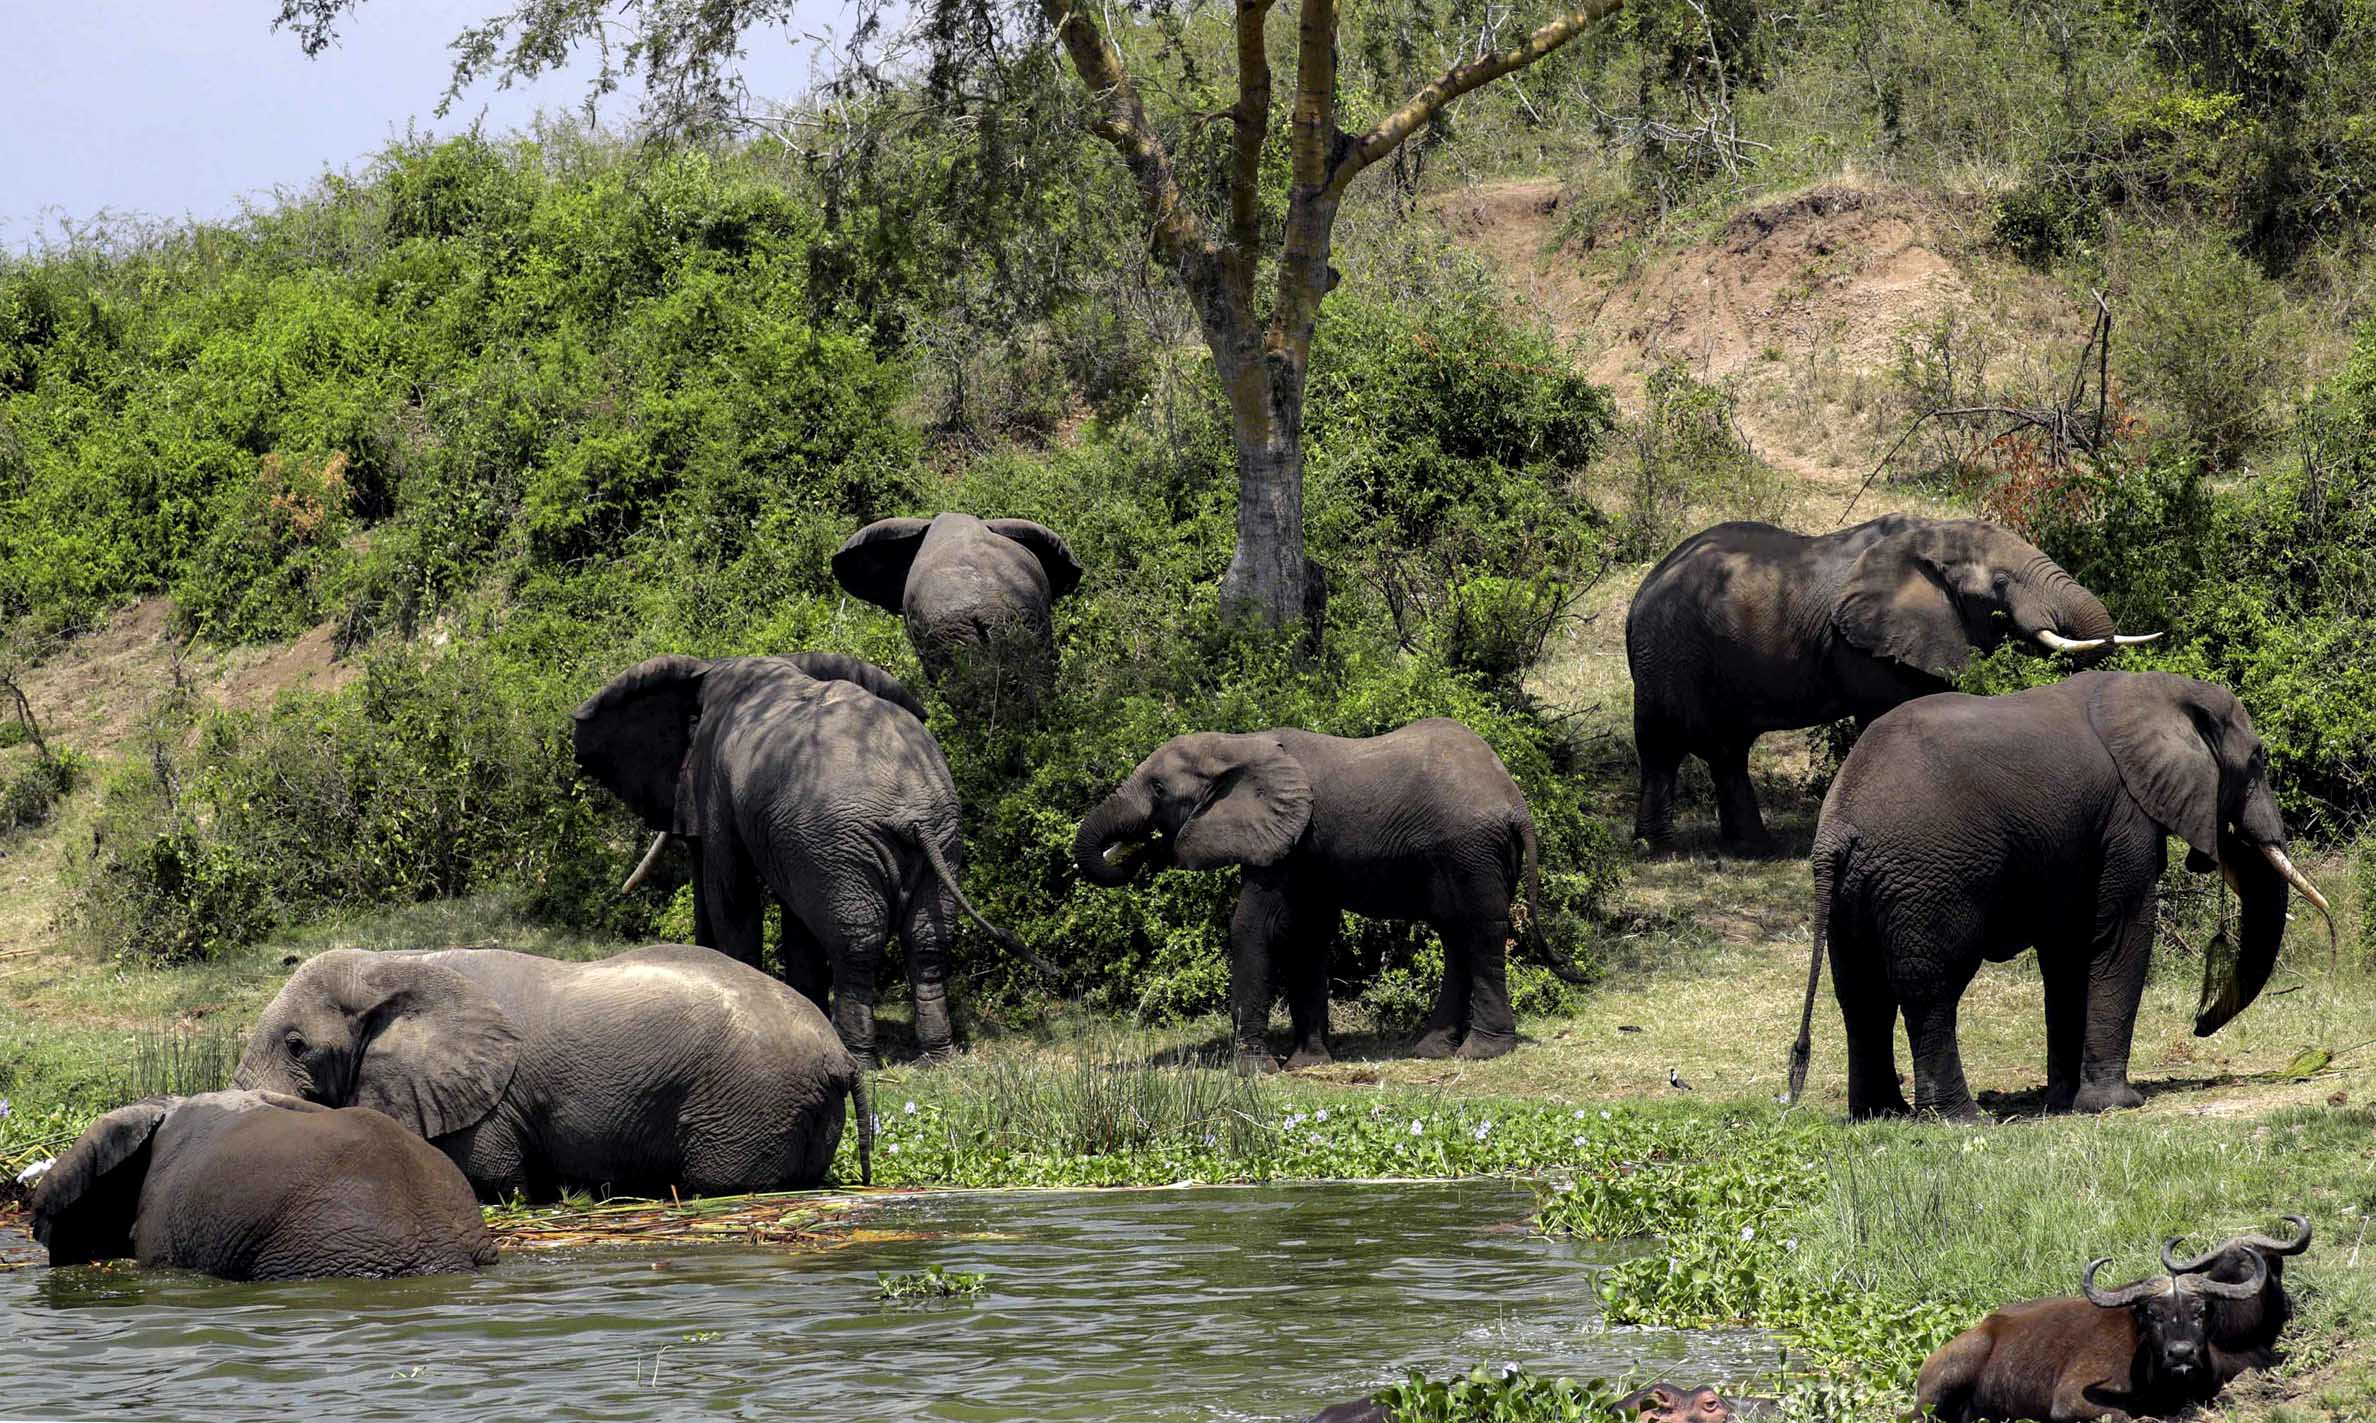  Elephants are seen at Queen Elizabeth National Park in Kasese, Western Uganda, March 2, 2023. (Photo by Hajarah Nalwadda/Xinhua)